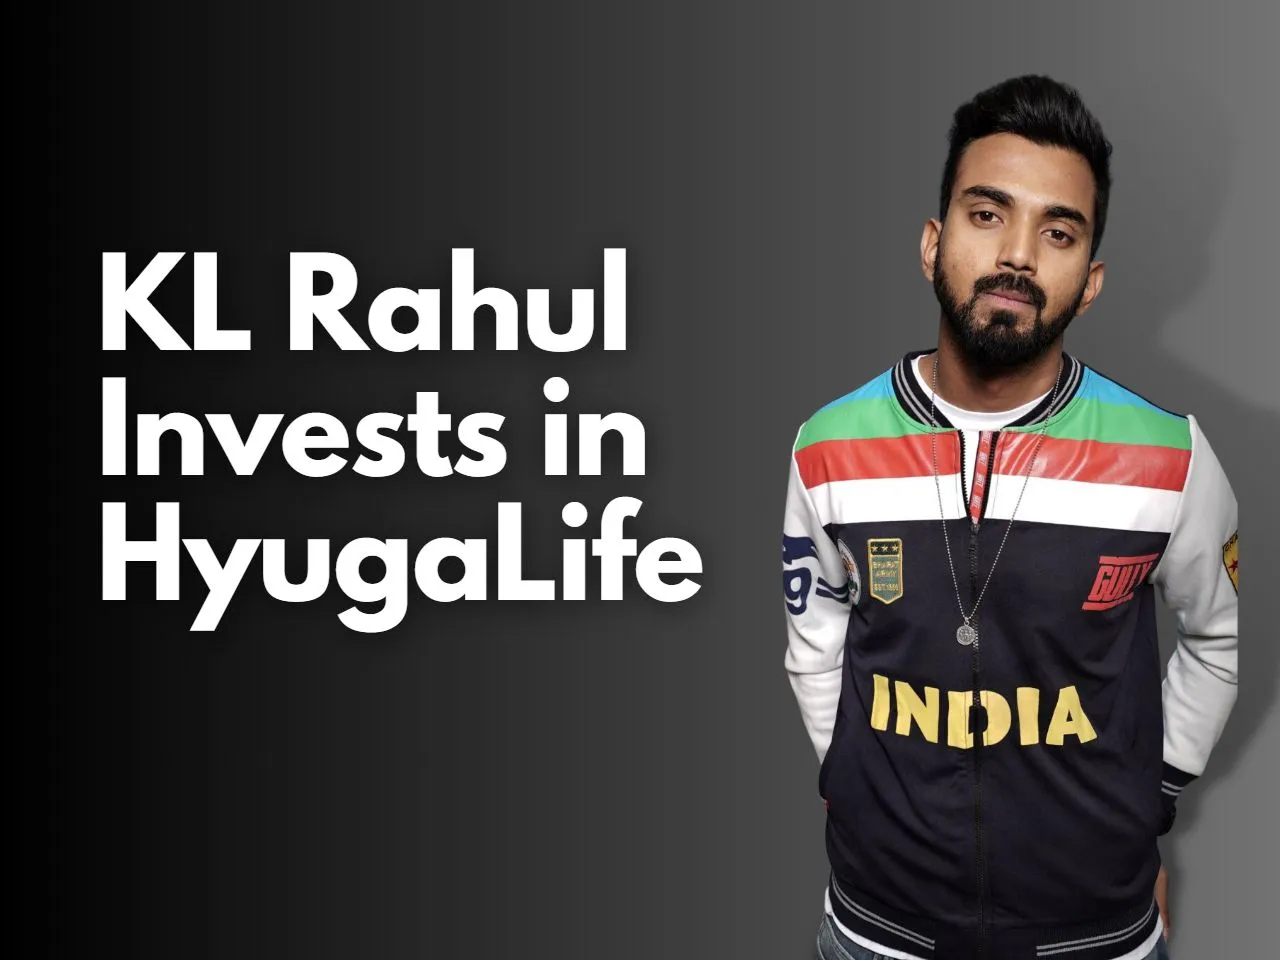 KL Rahul Strengthens His Entrepreneurship Game, Invests In HyugaLife!